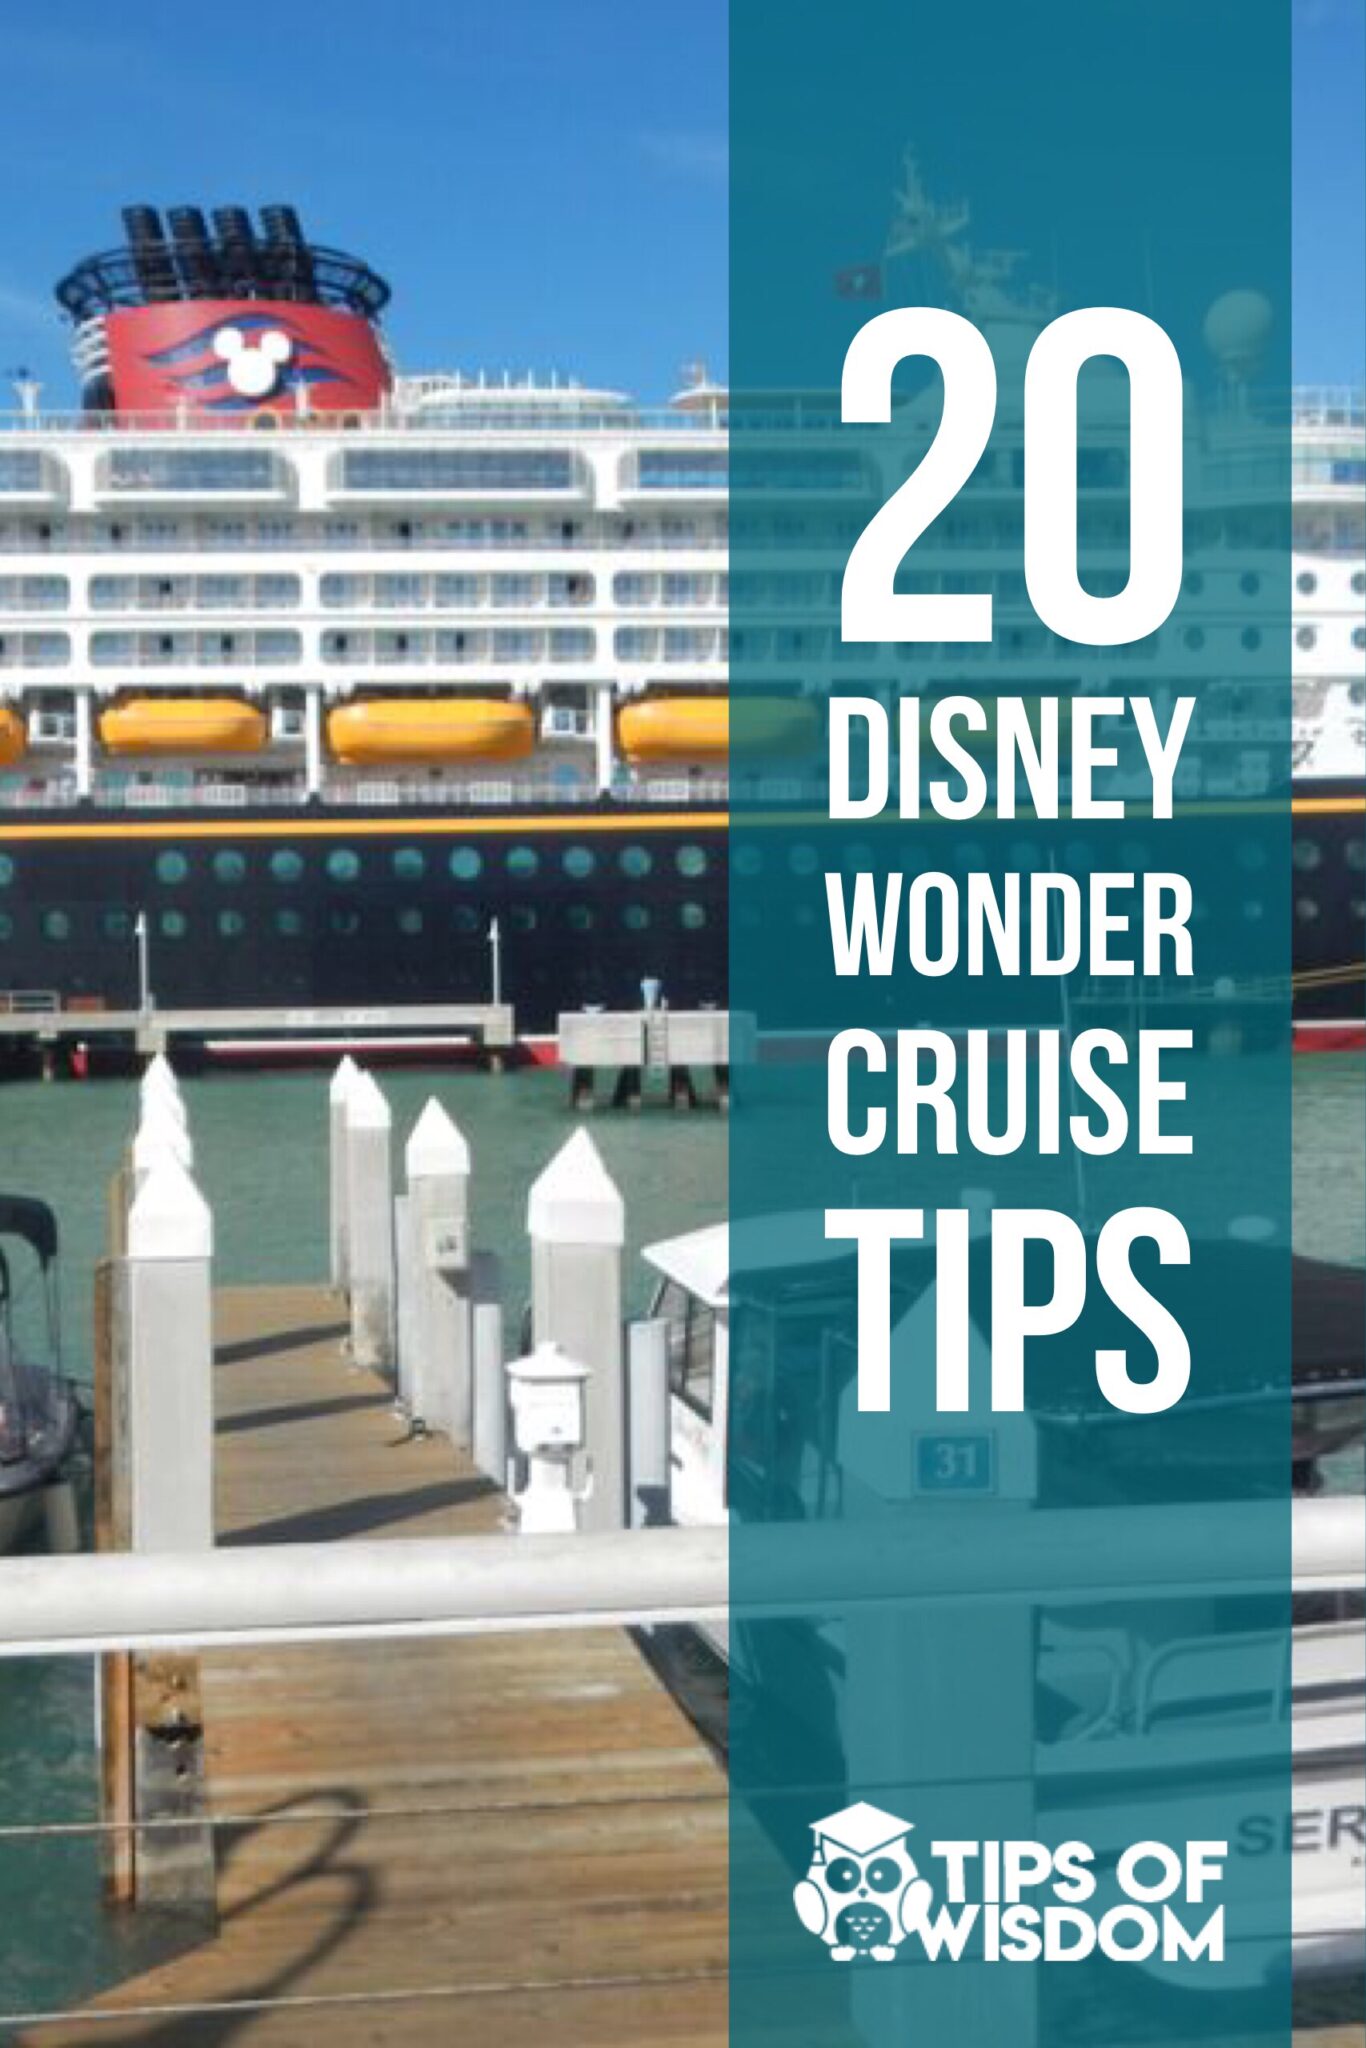 Disney Cruise tips and ideas aboard the Disney Wonder Cruise ship